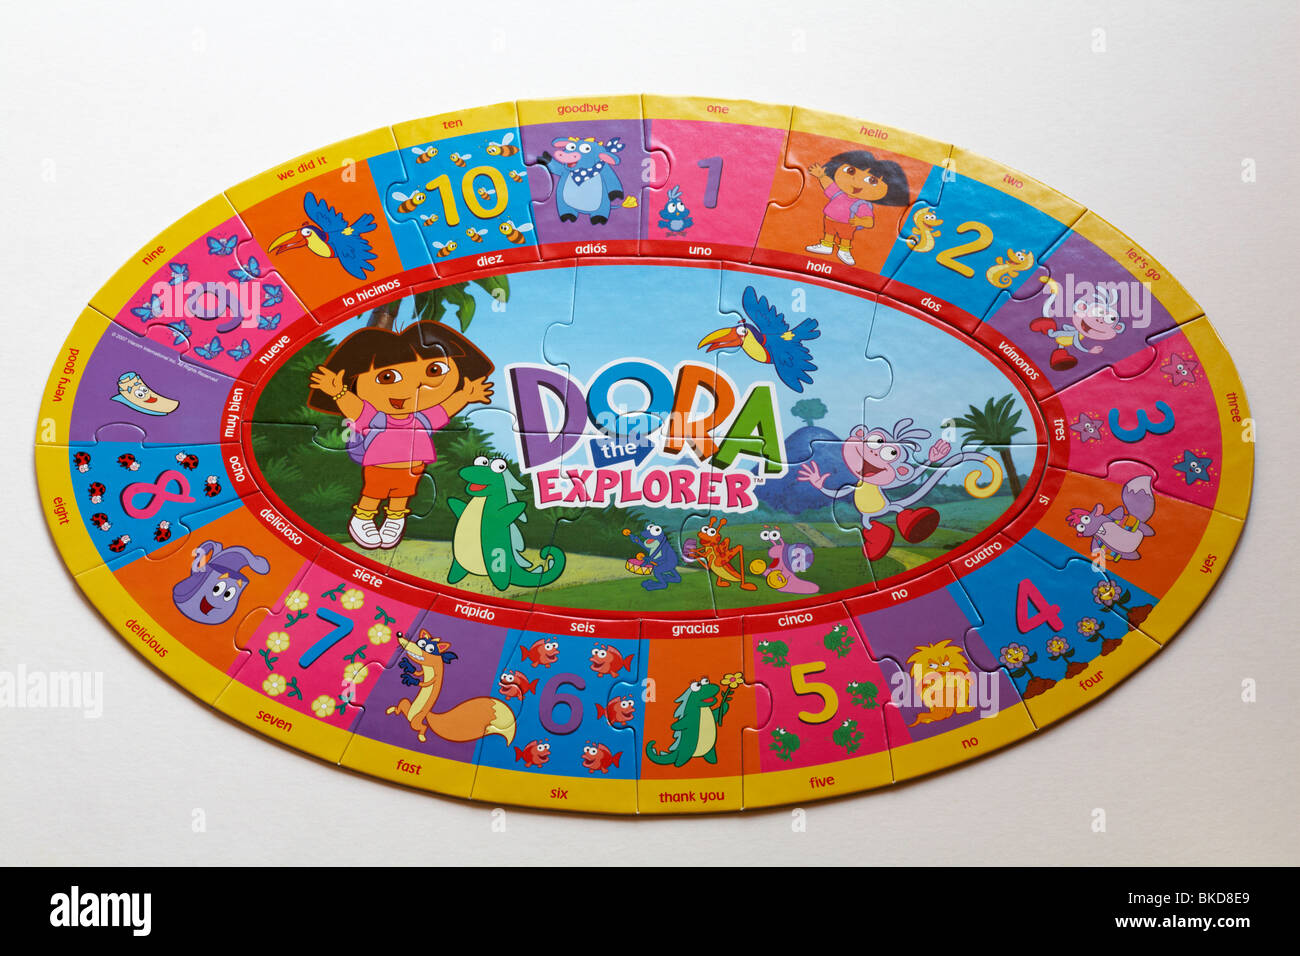 Dora the Explorer jigsaw puzzle Stock Photo